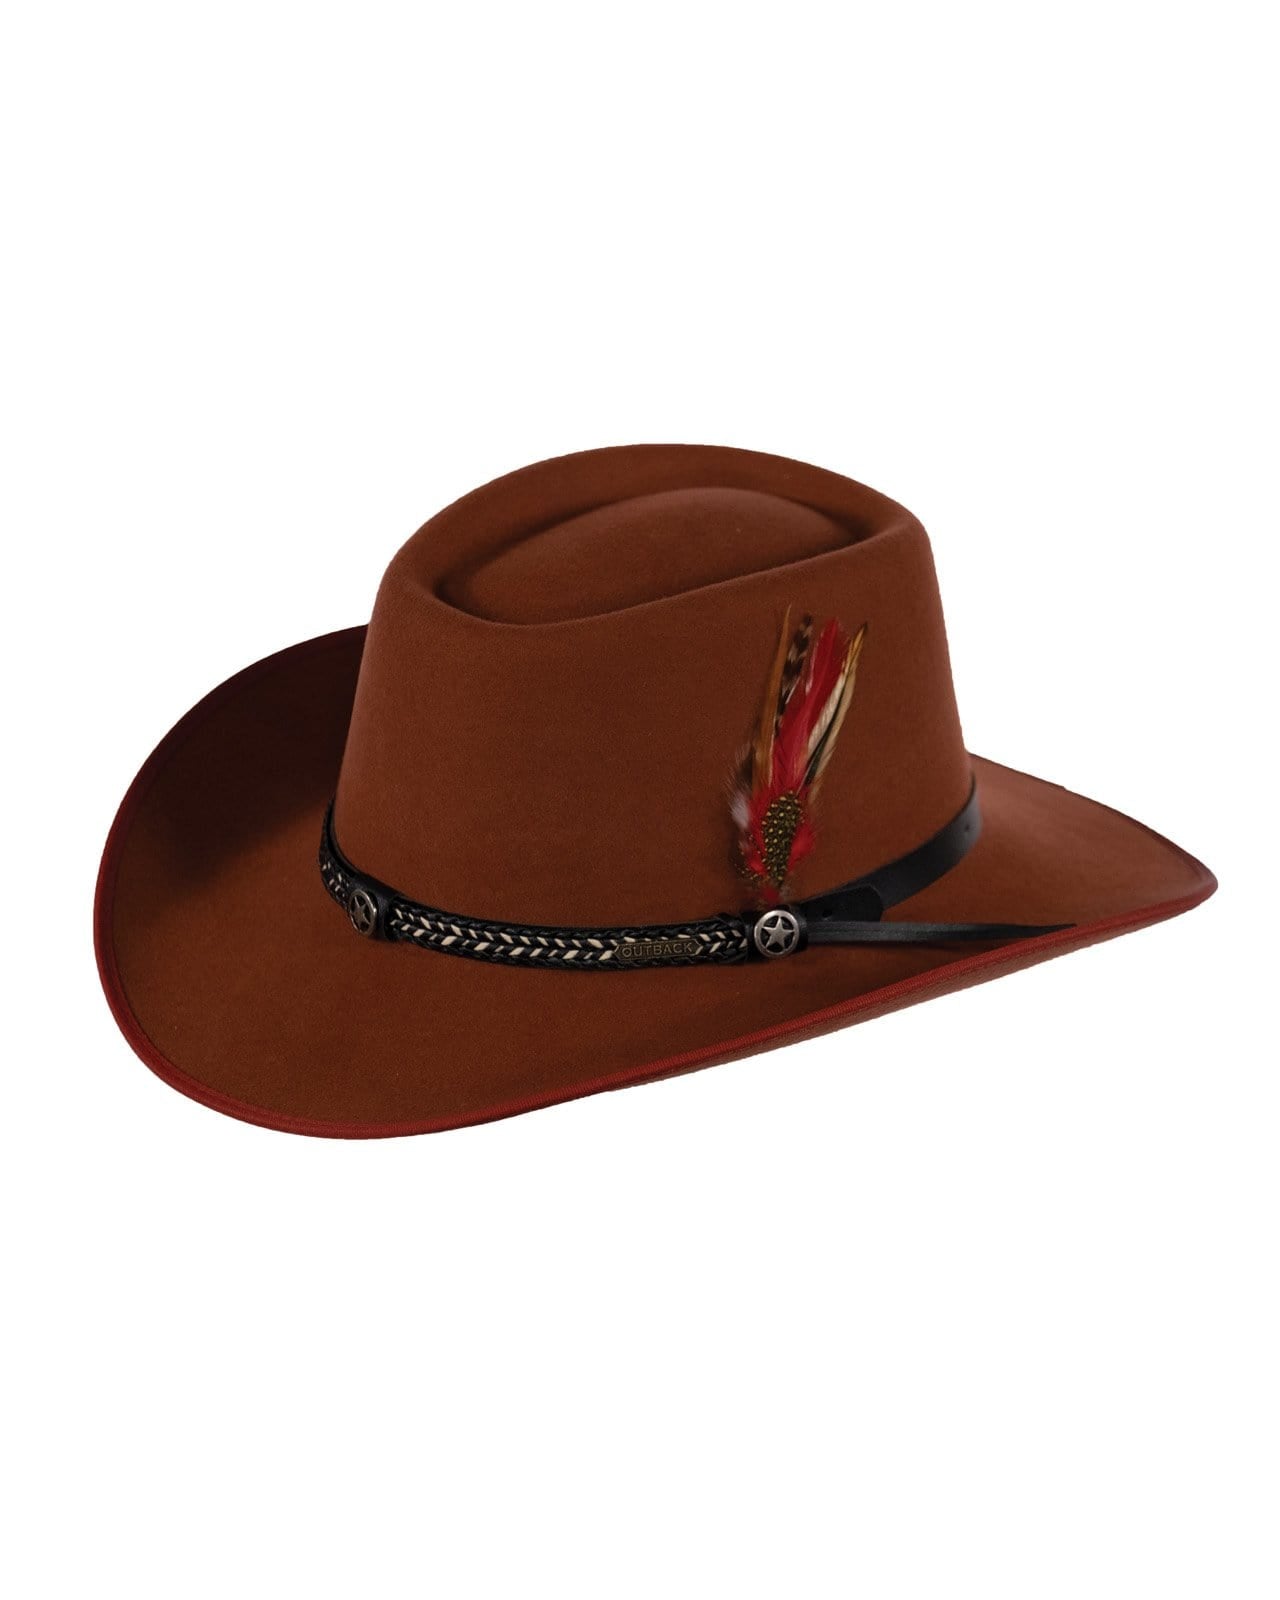 Derby - Pecan Felt Hat - Limpia Creek Hats